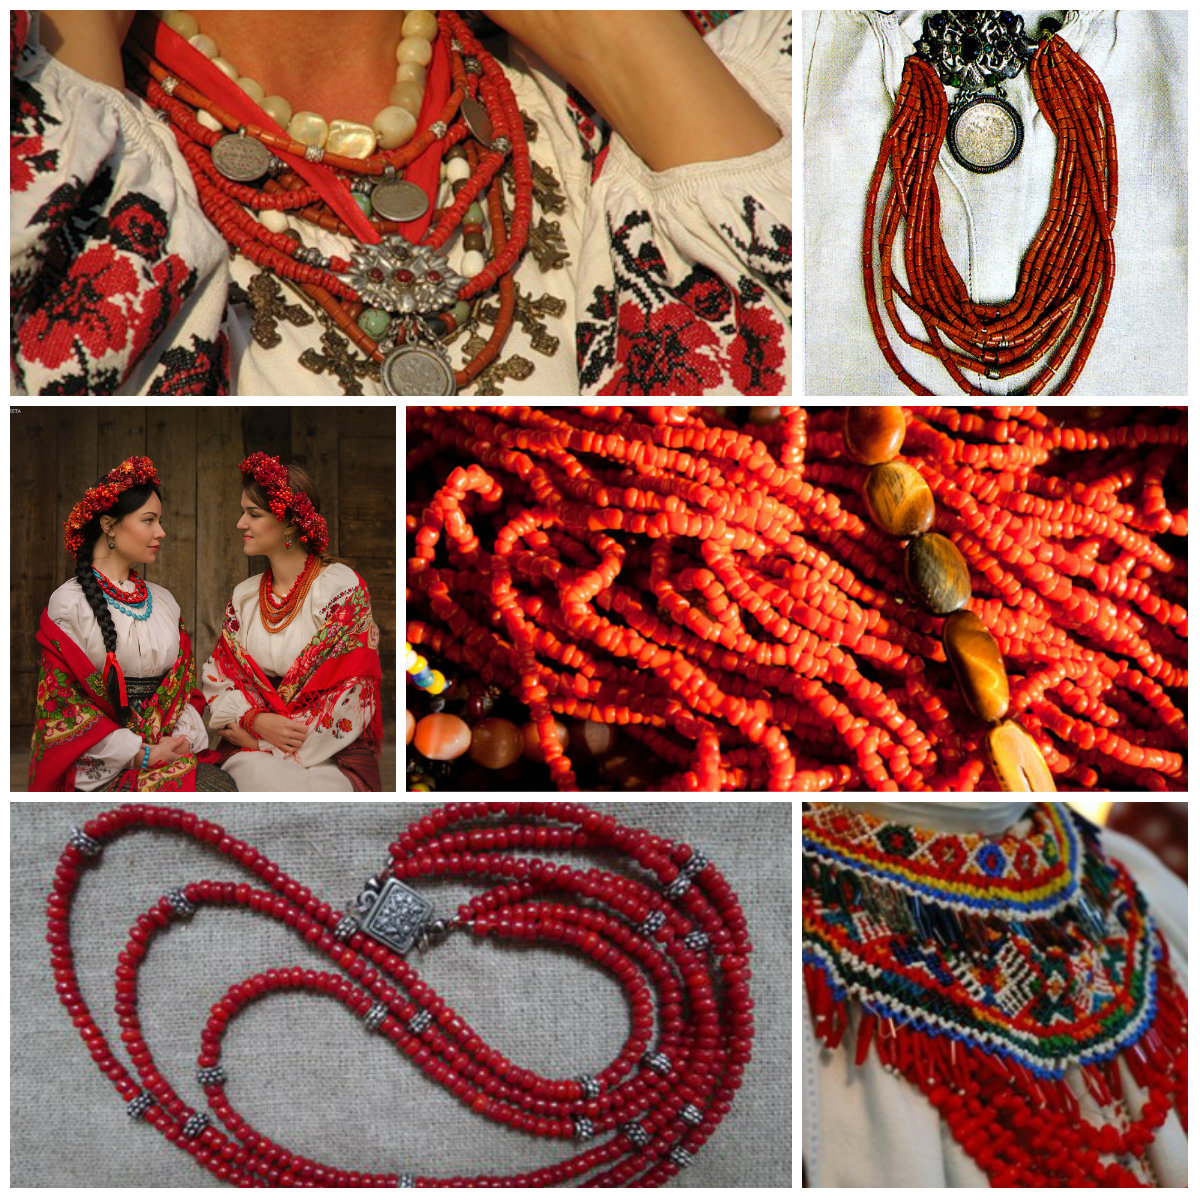 Ukrainian neck ornaments: history and symbols